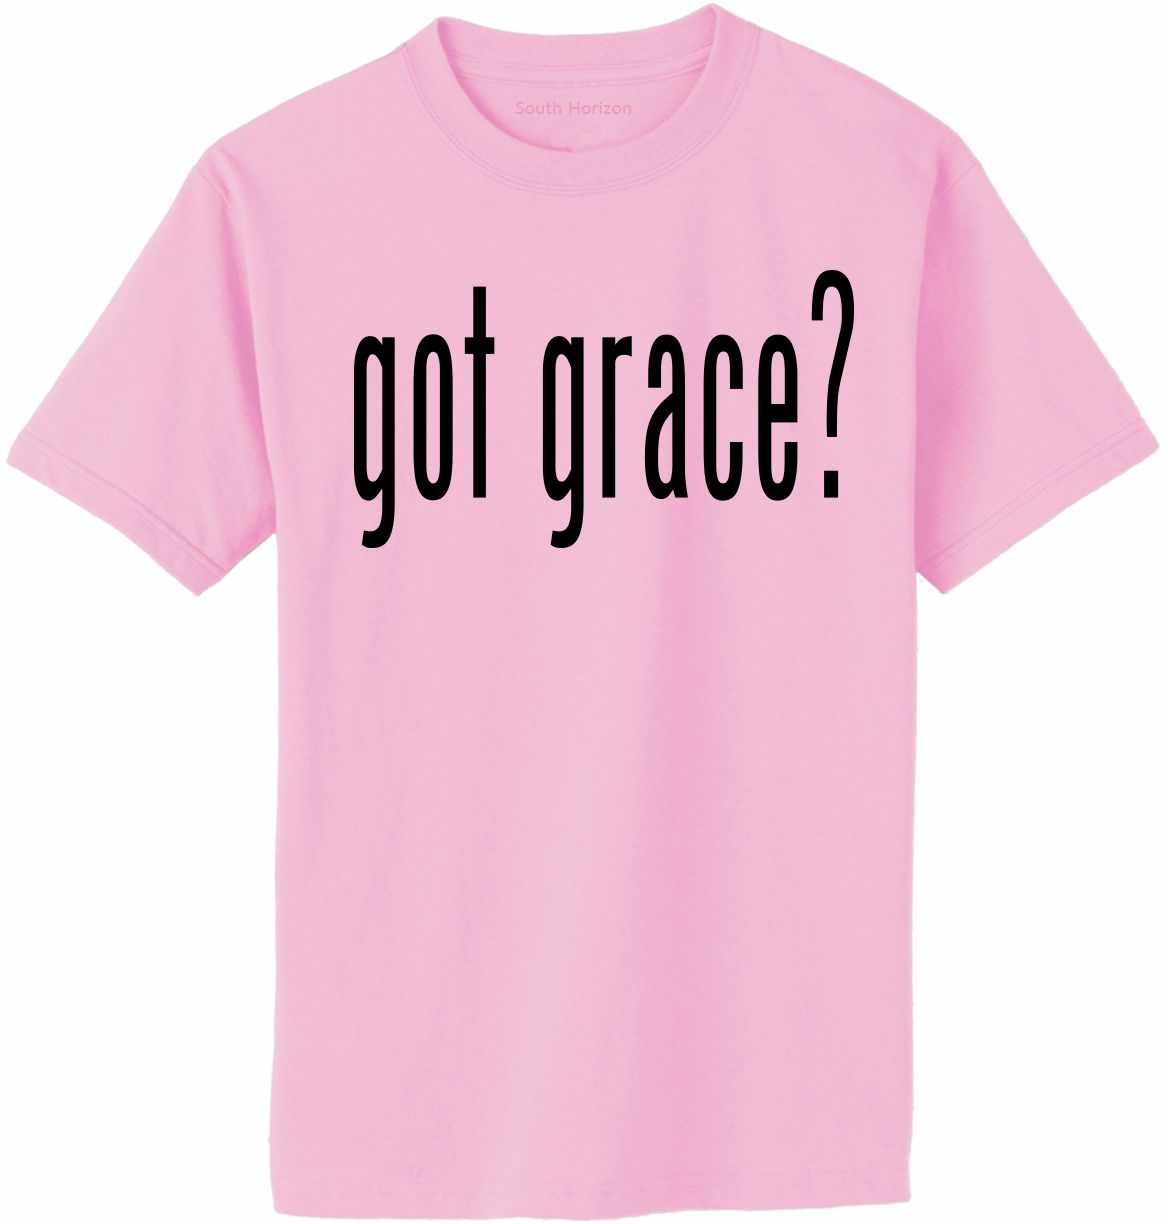 Got Grace? on Adult T-Shirt